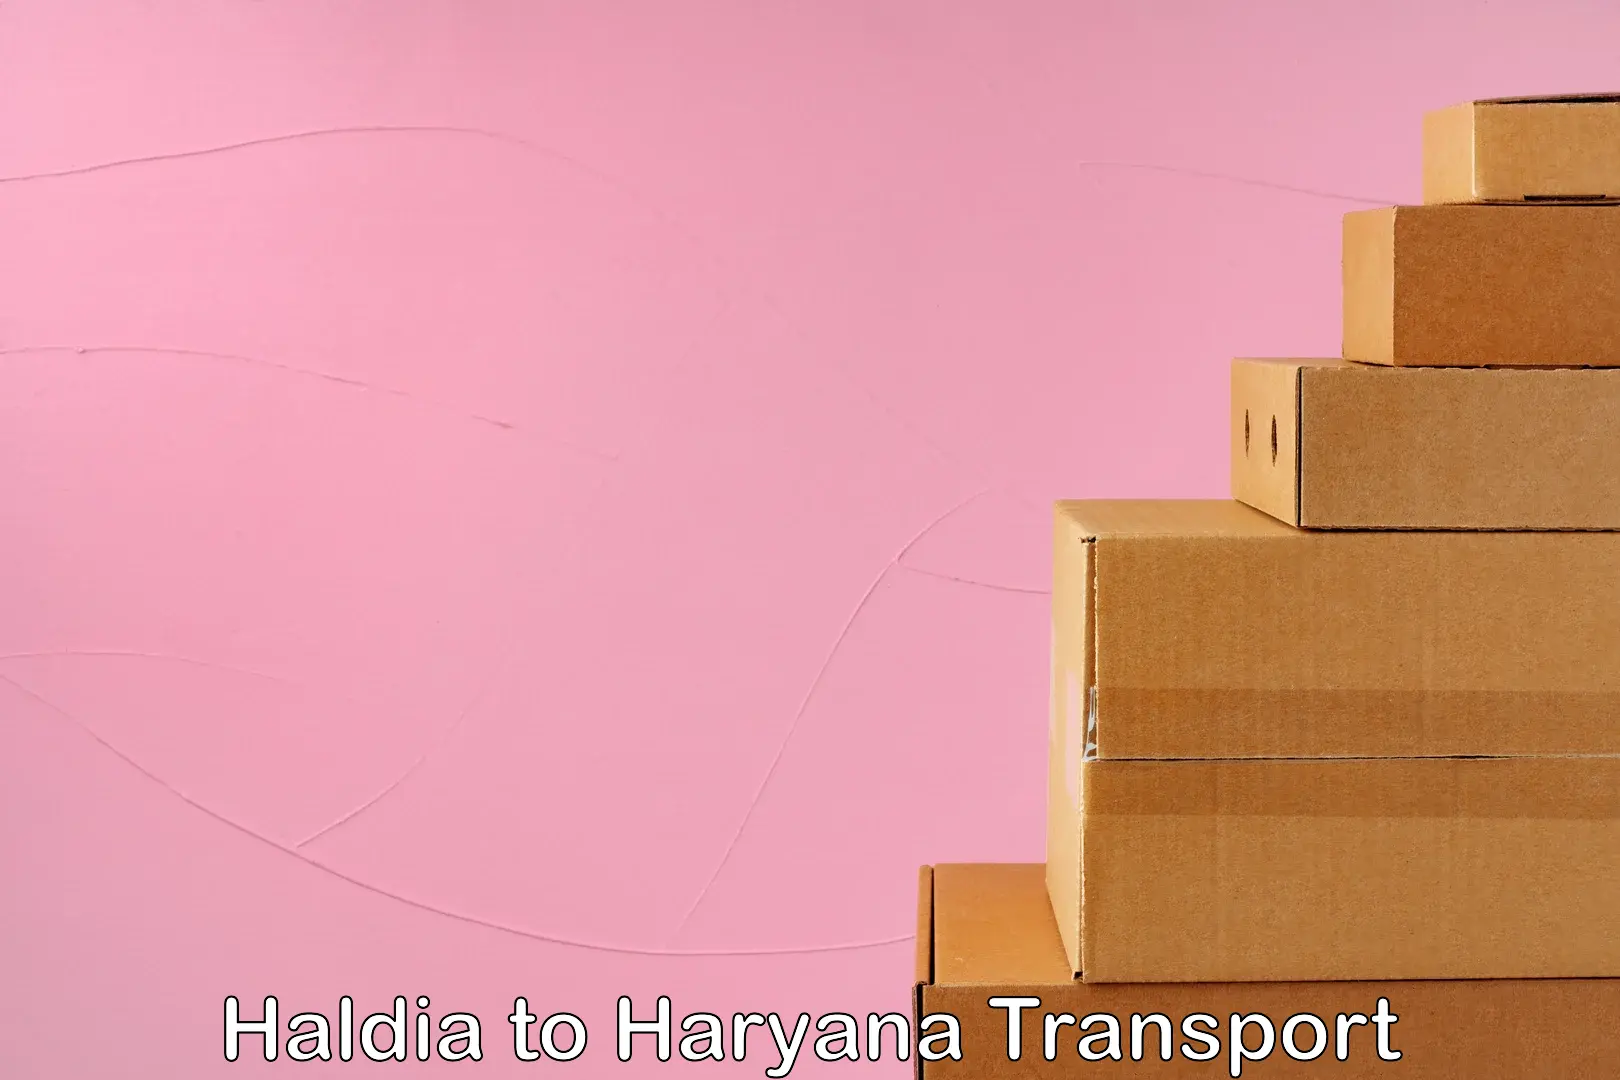 Shipping partner Haldia to Faridabad